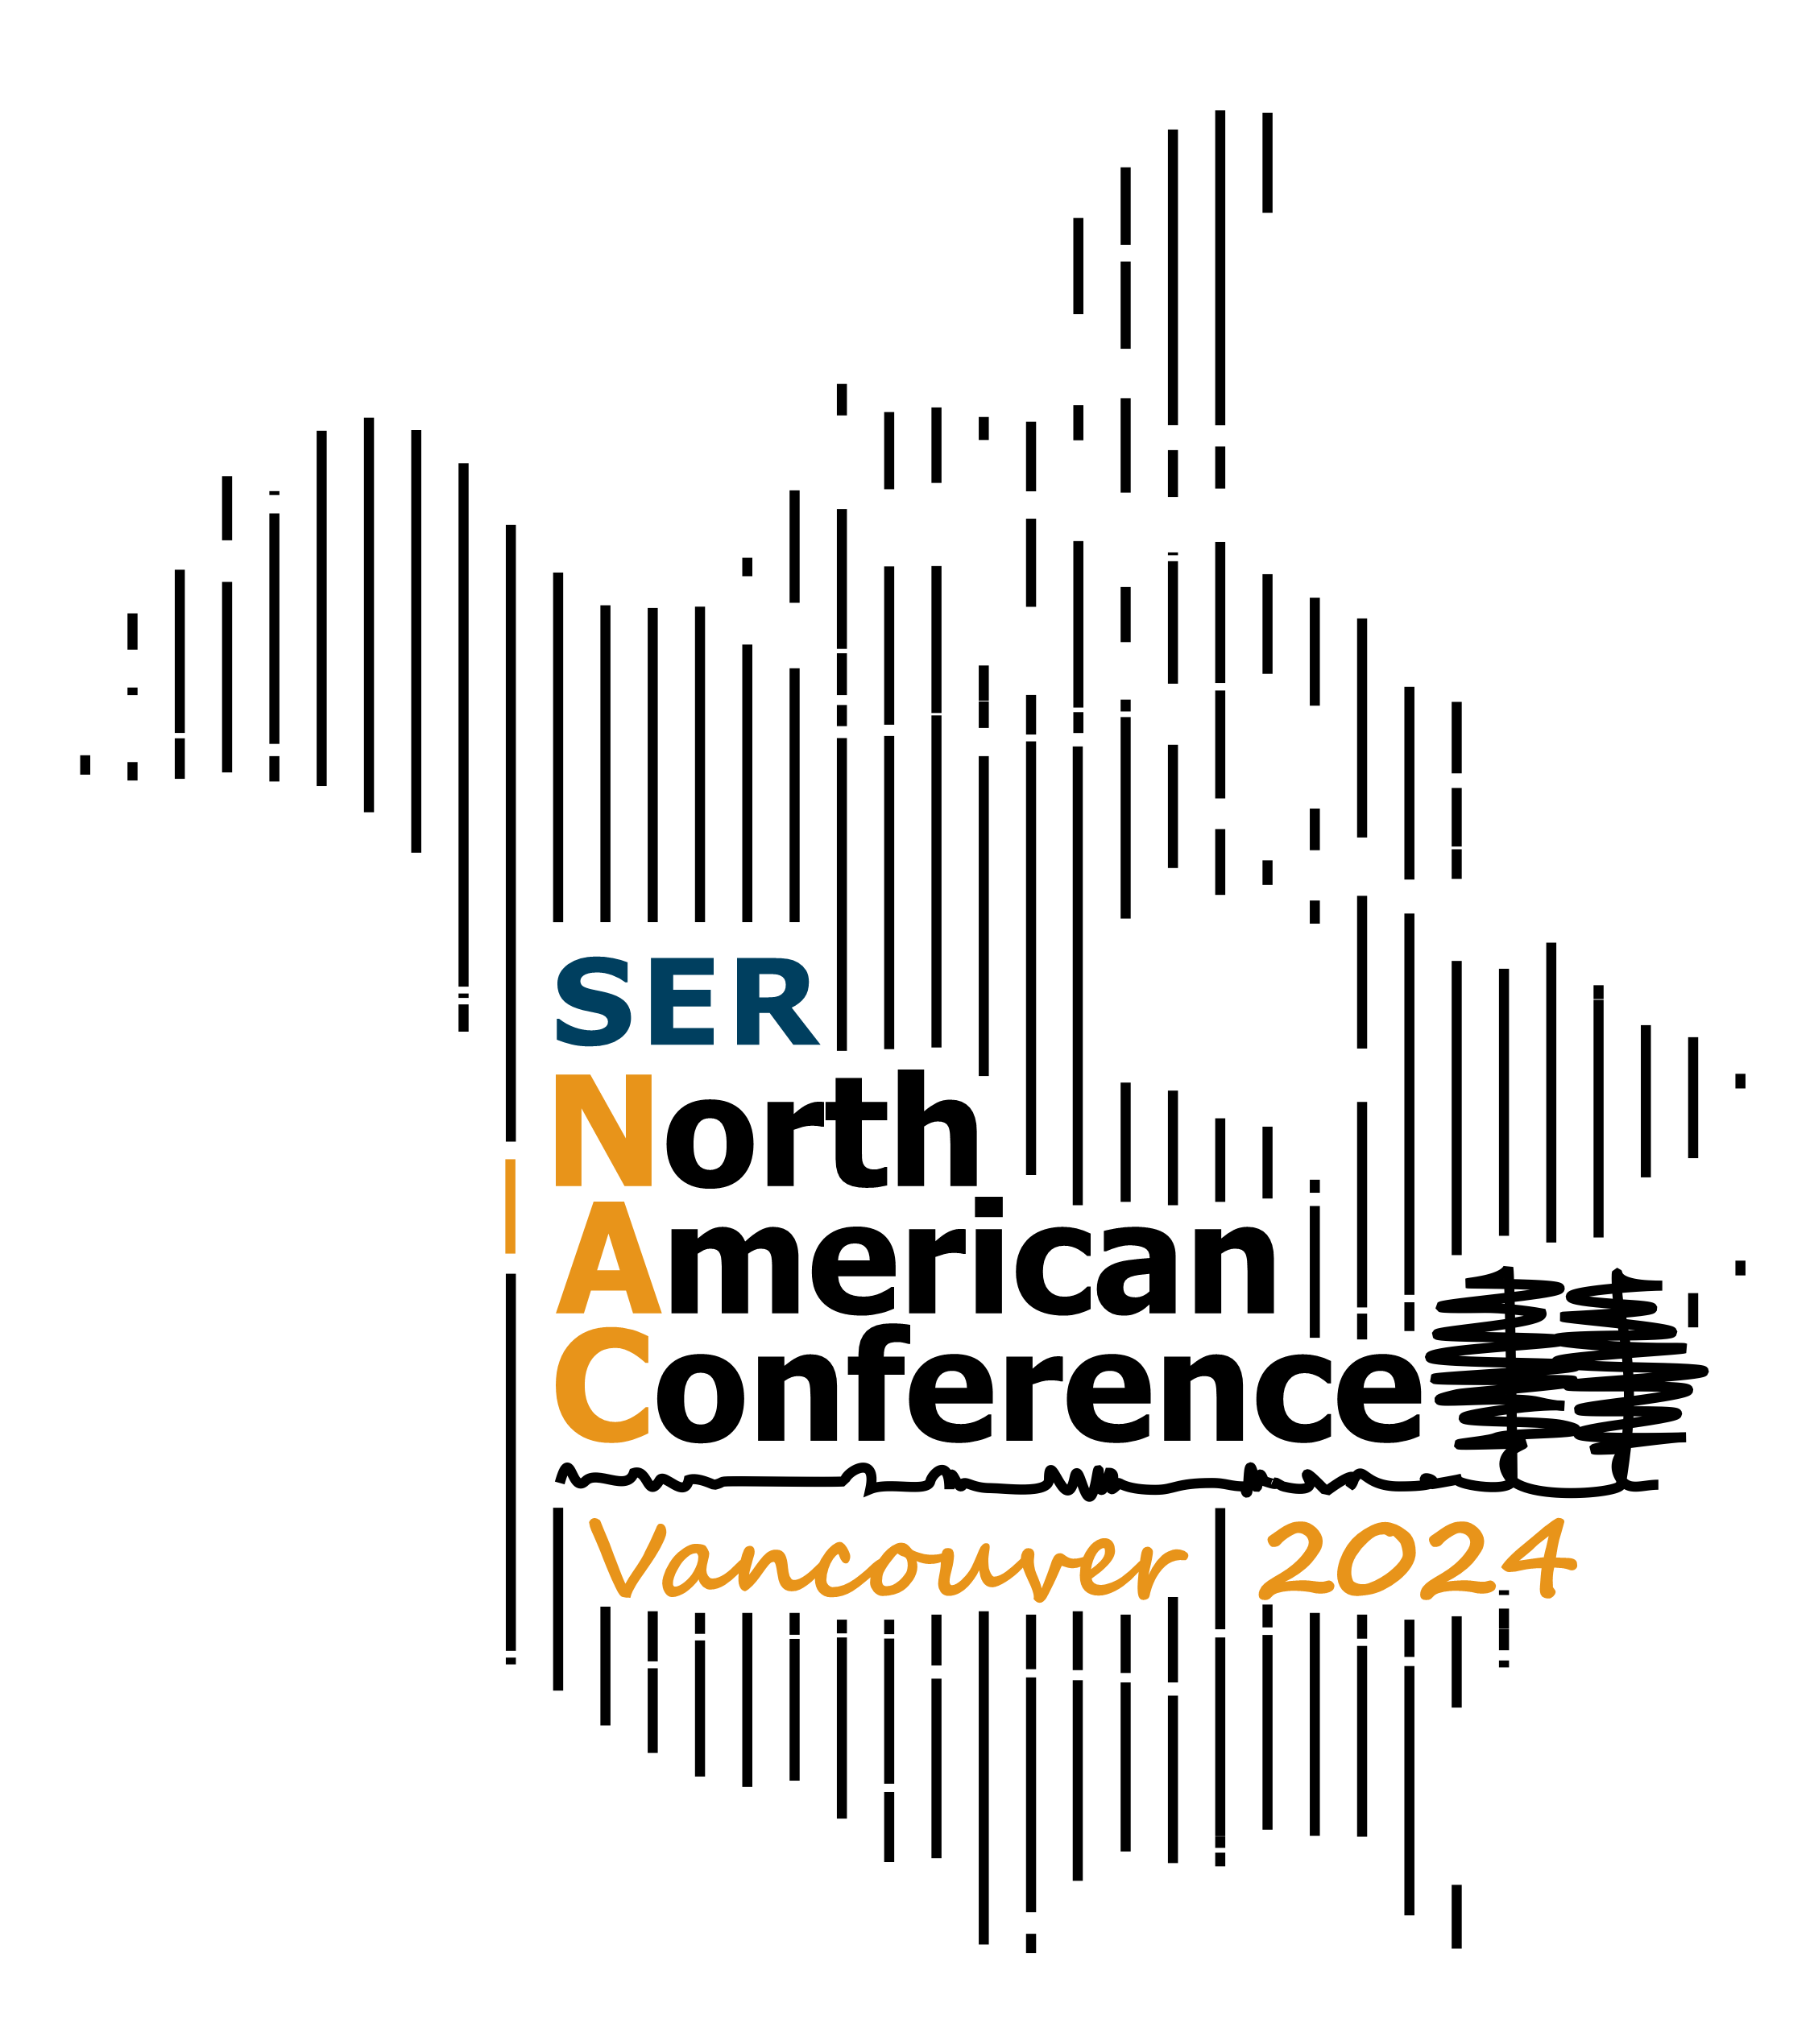 SER North American Conference